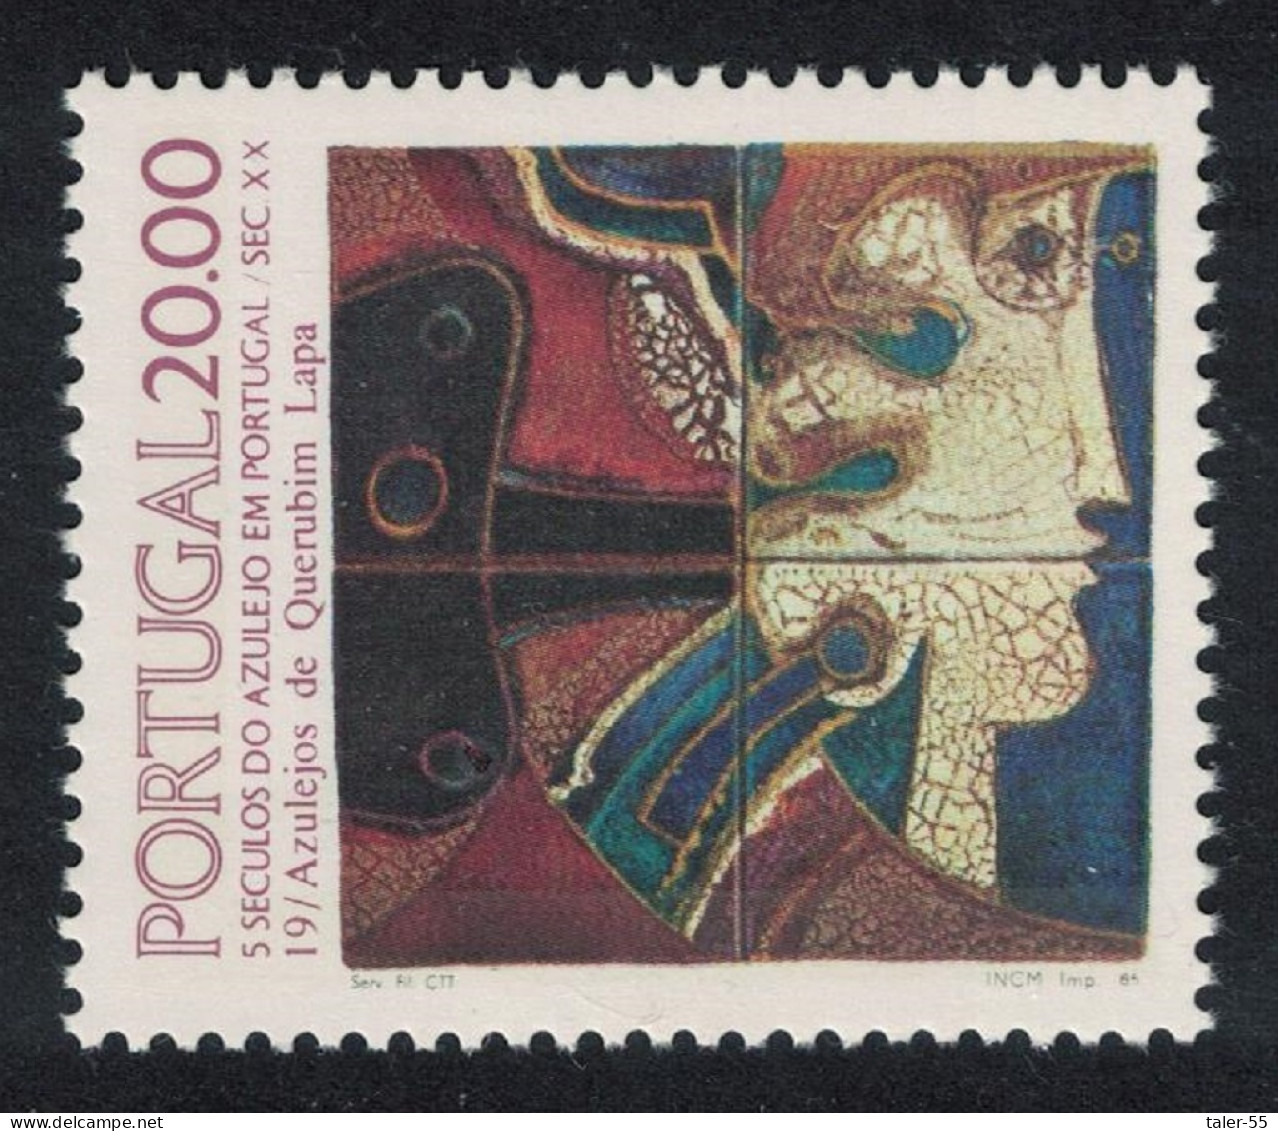 Portugal Tiles 19th Series 1985 MNH SG#2020 - Nuovi